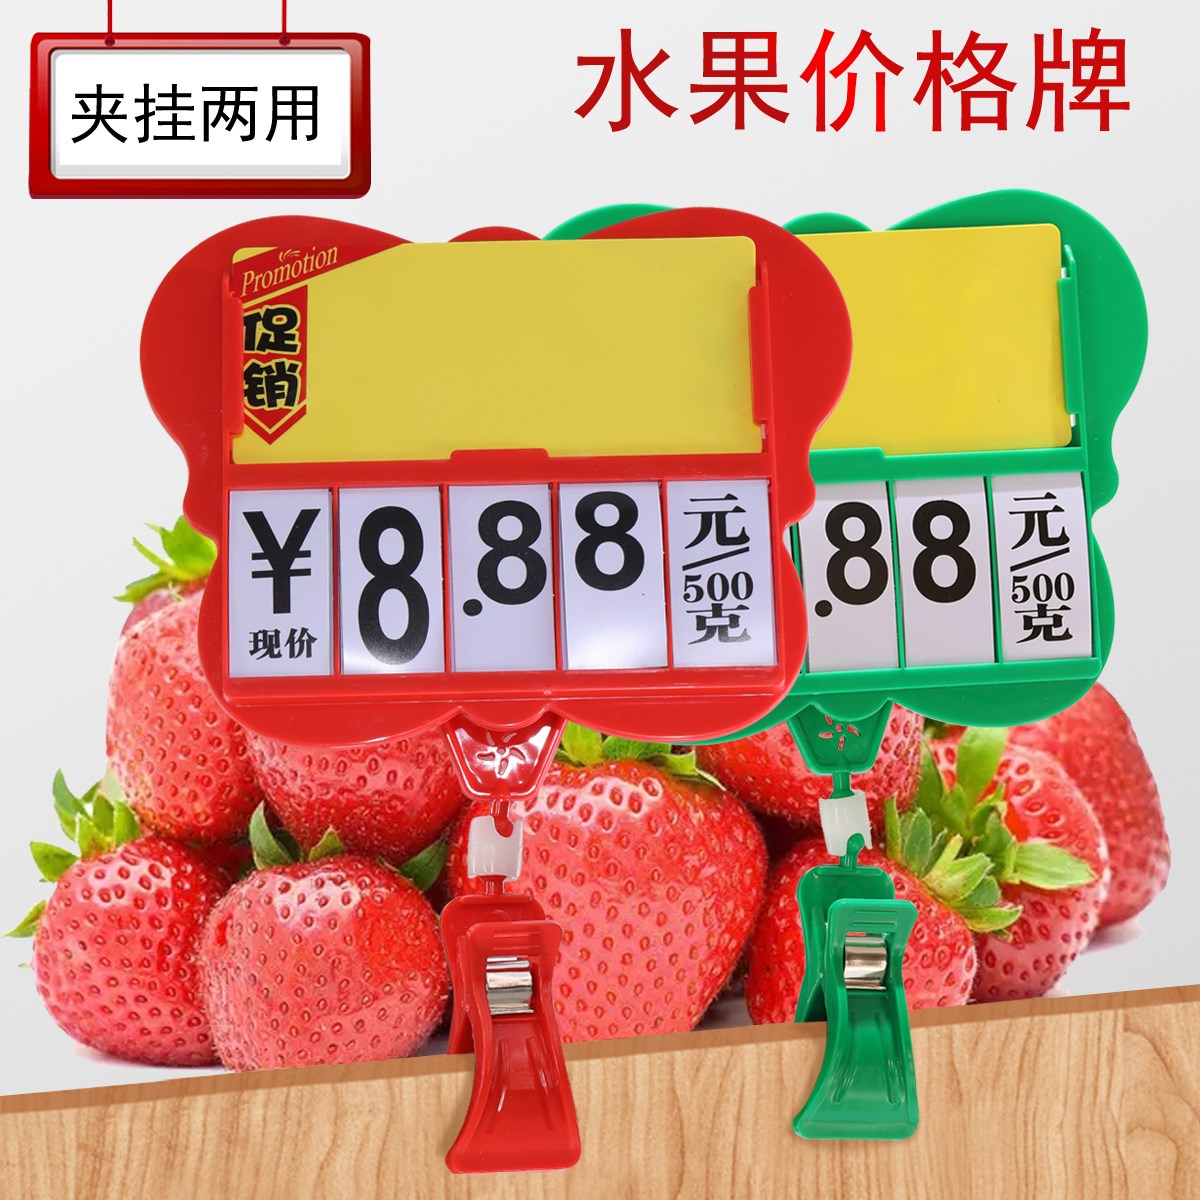 pop广告夹子生鲜超市水果价格牌菜价促销标签标价特价